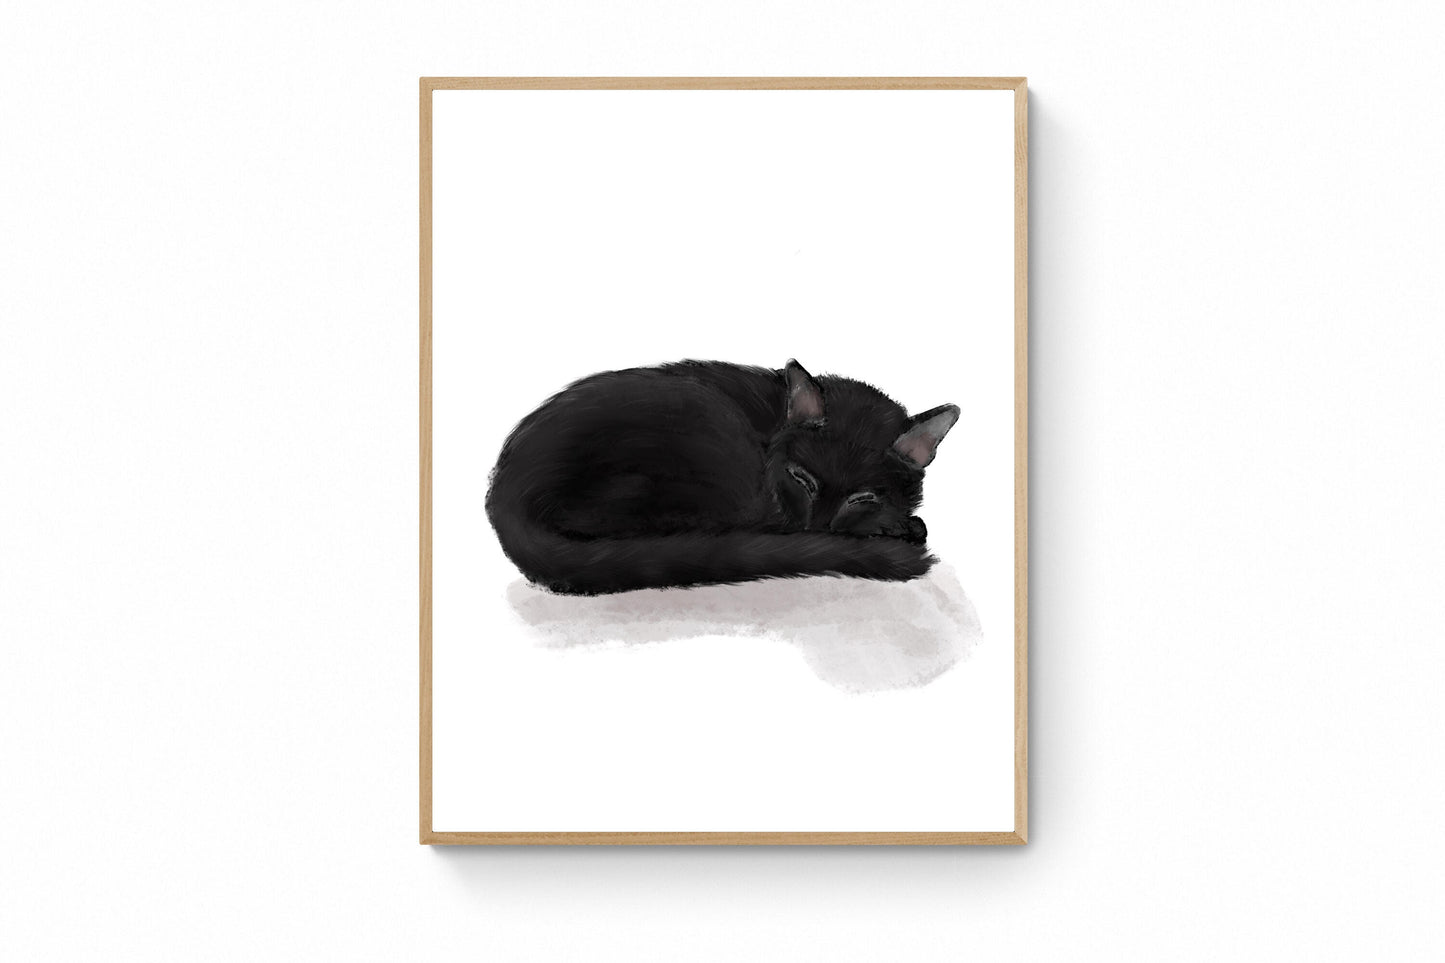 Sleeping Black Cat Print